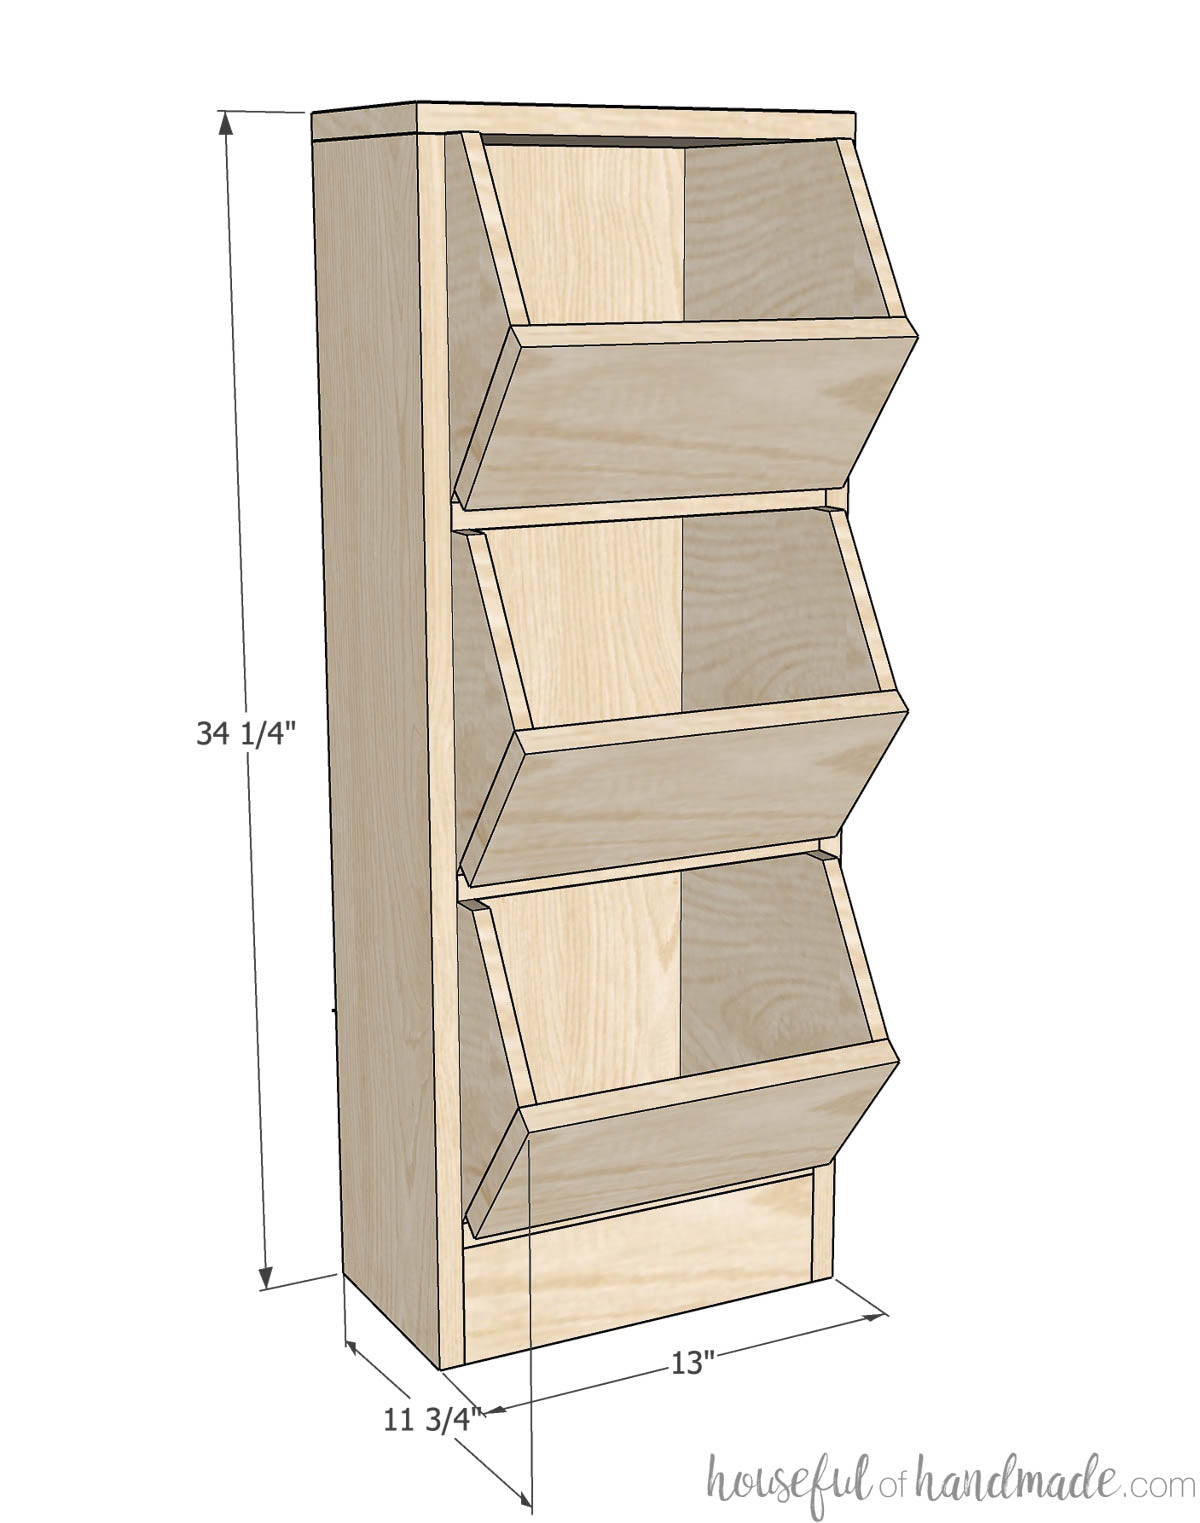 Wooden Spice Rack Build Plans - Houseful of Handmade